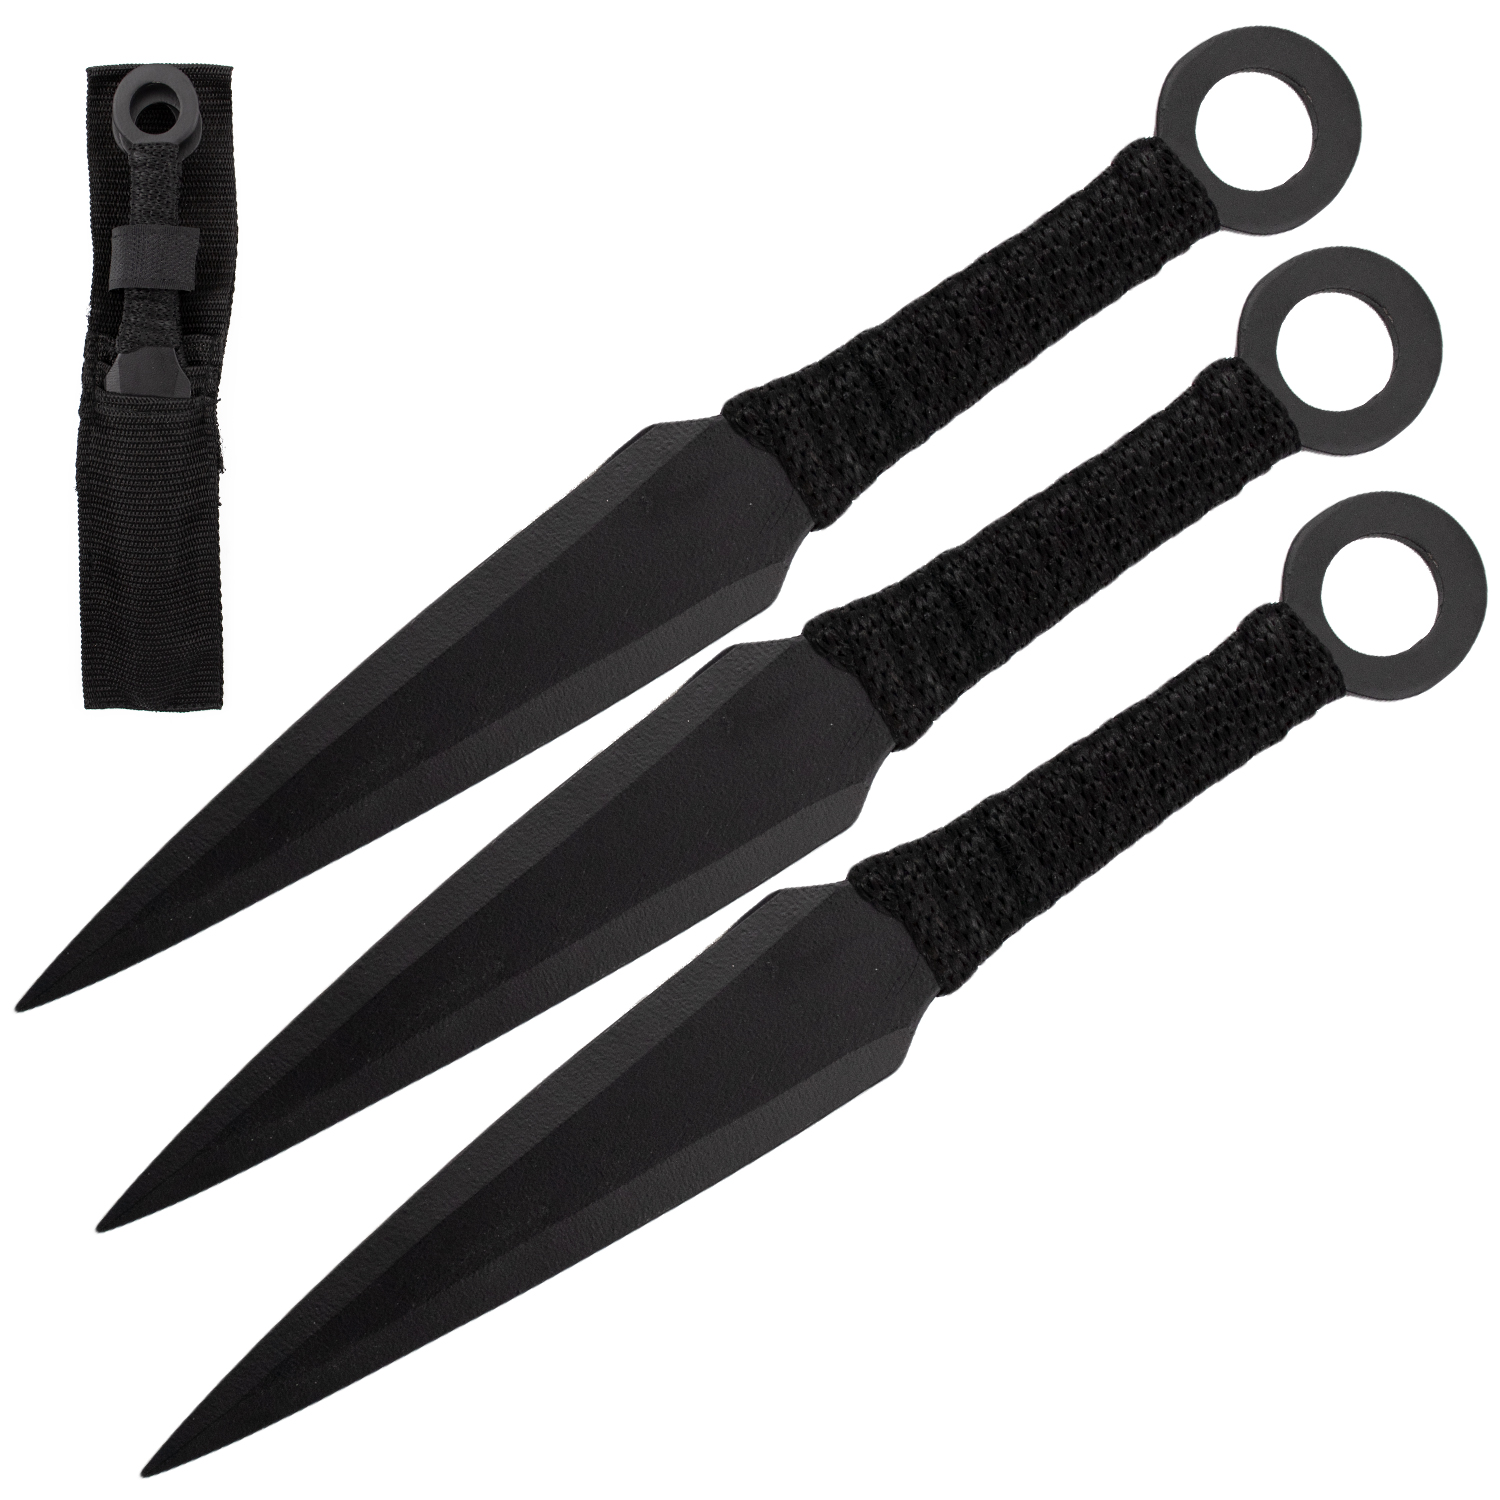 8 Inch Throwing Knife Set (Set of 3) Black